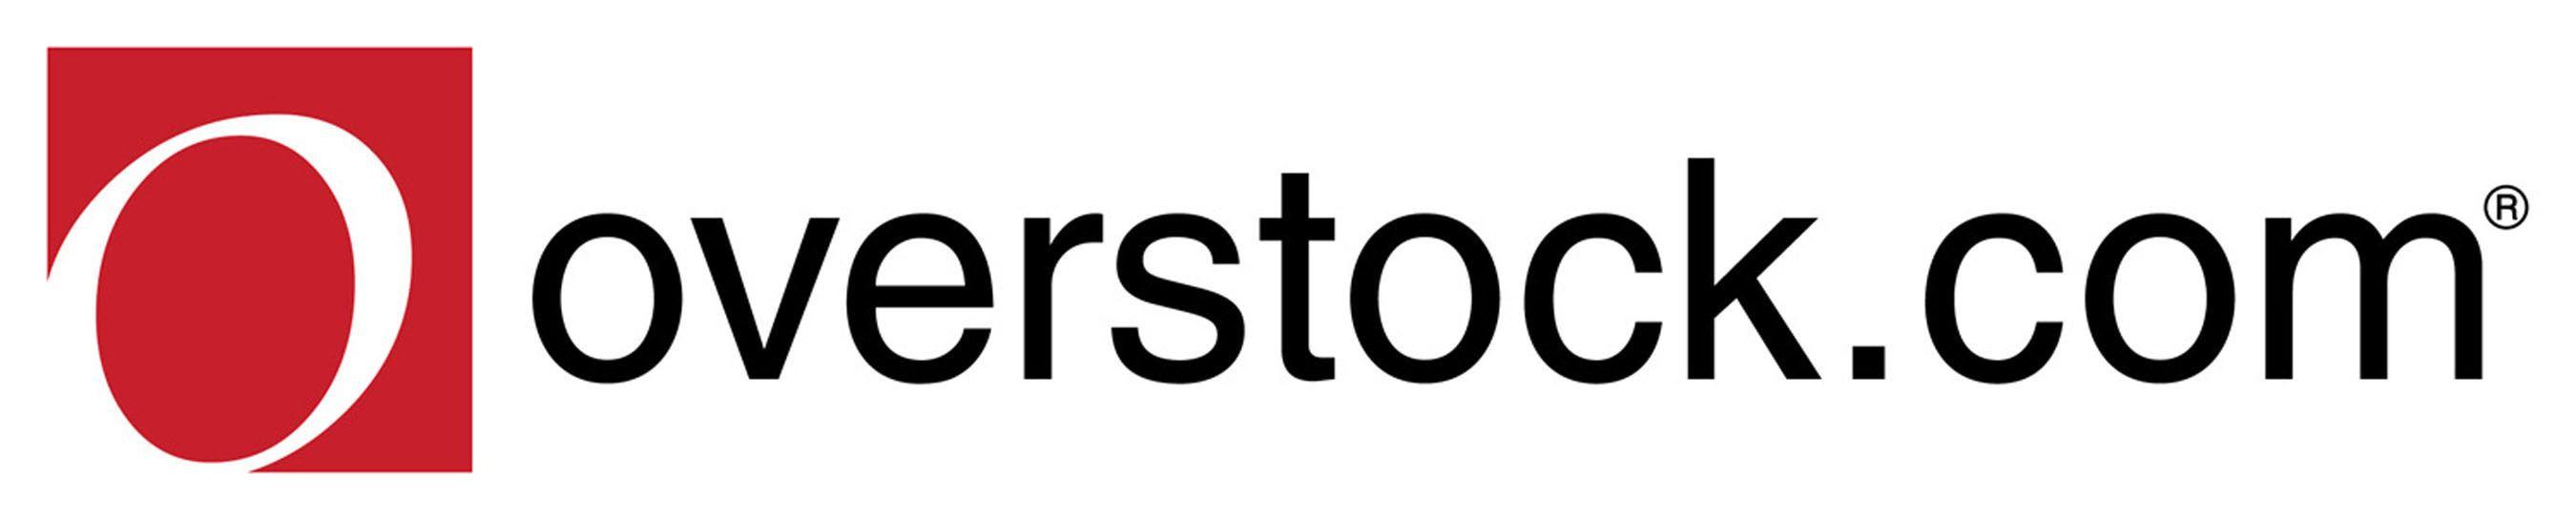 Overstock Logo - Overstock | Okta